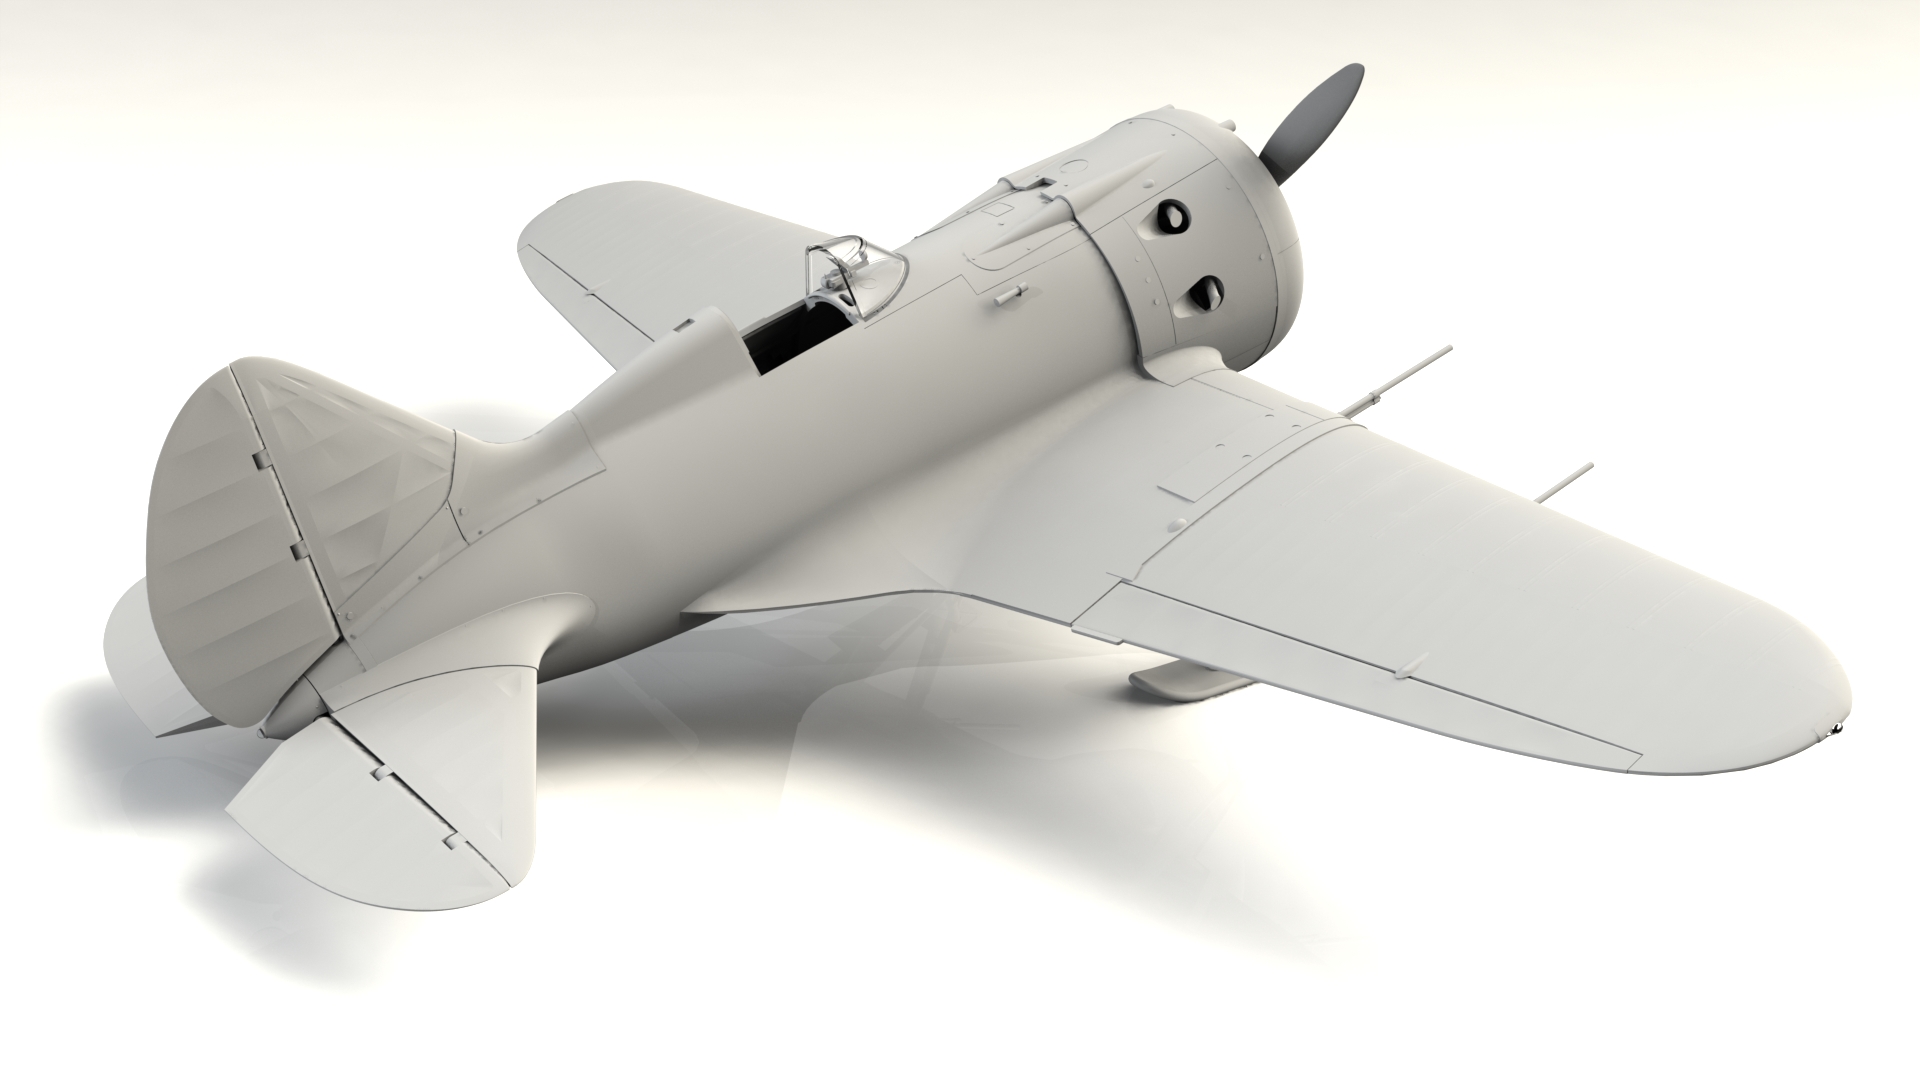 1/32 I-16 type 17, WWII Soviet Fighter 32005